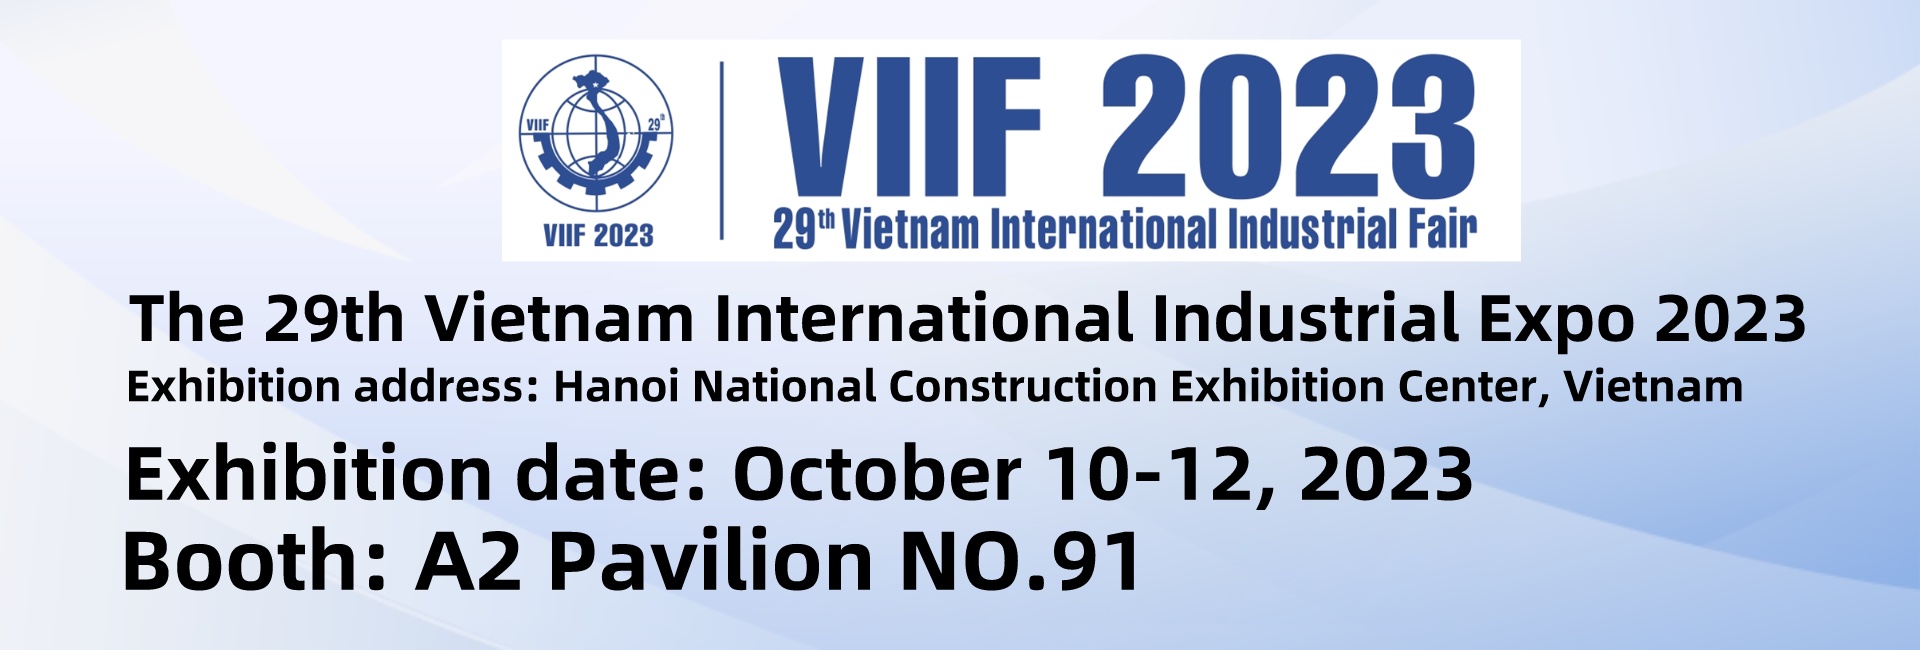 A 29ª Expo Industrial Internacional do Vietnã 2023